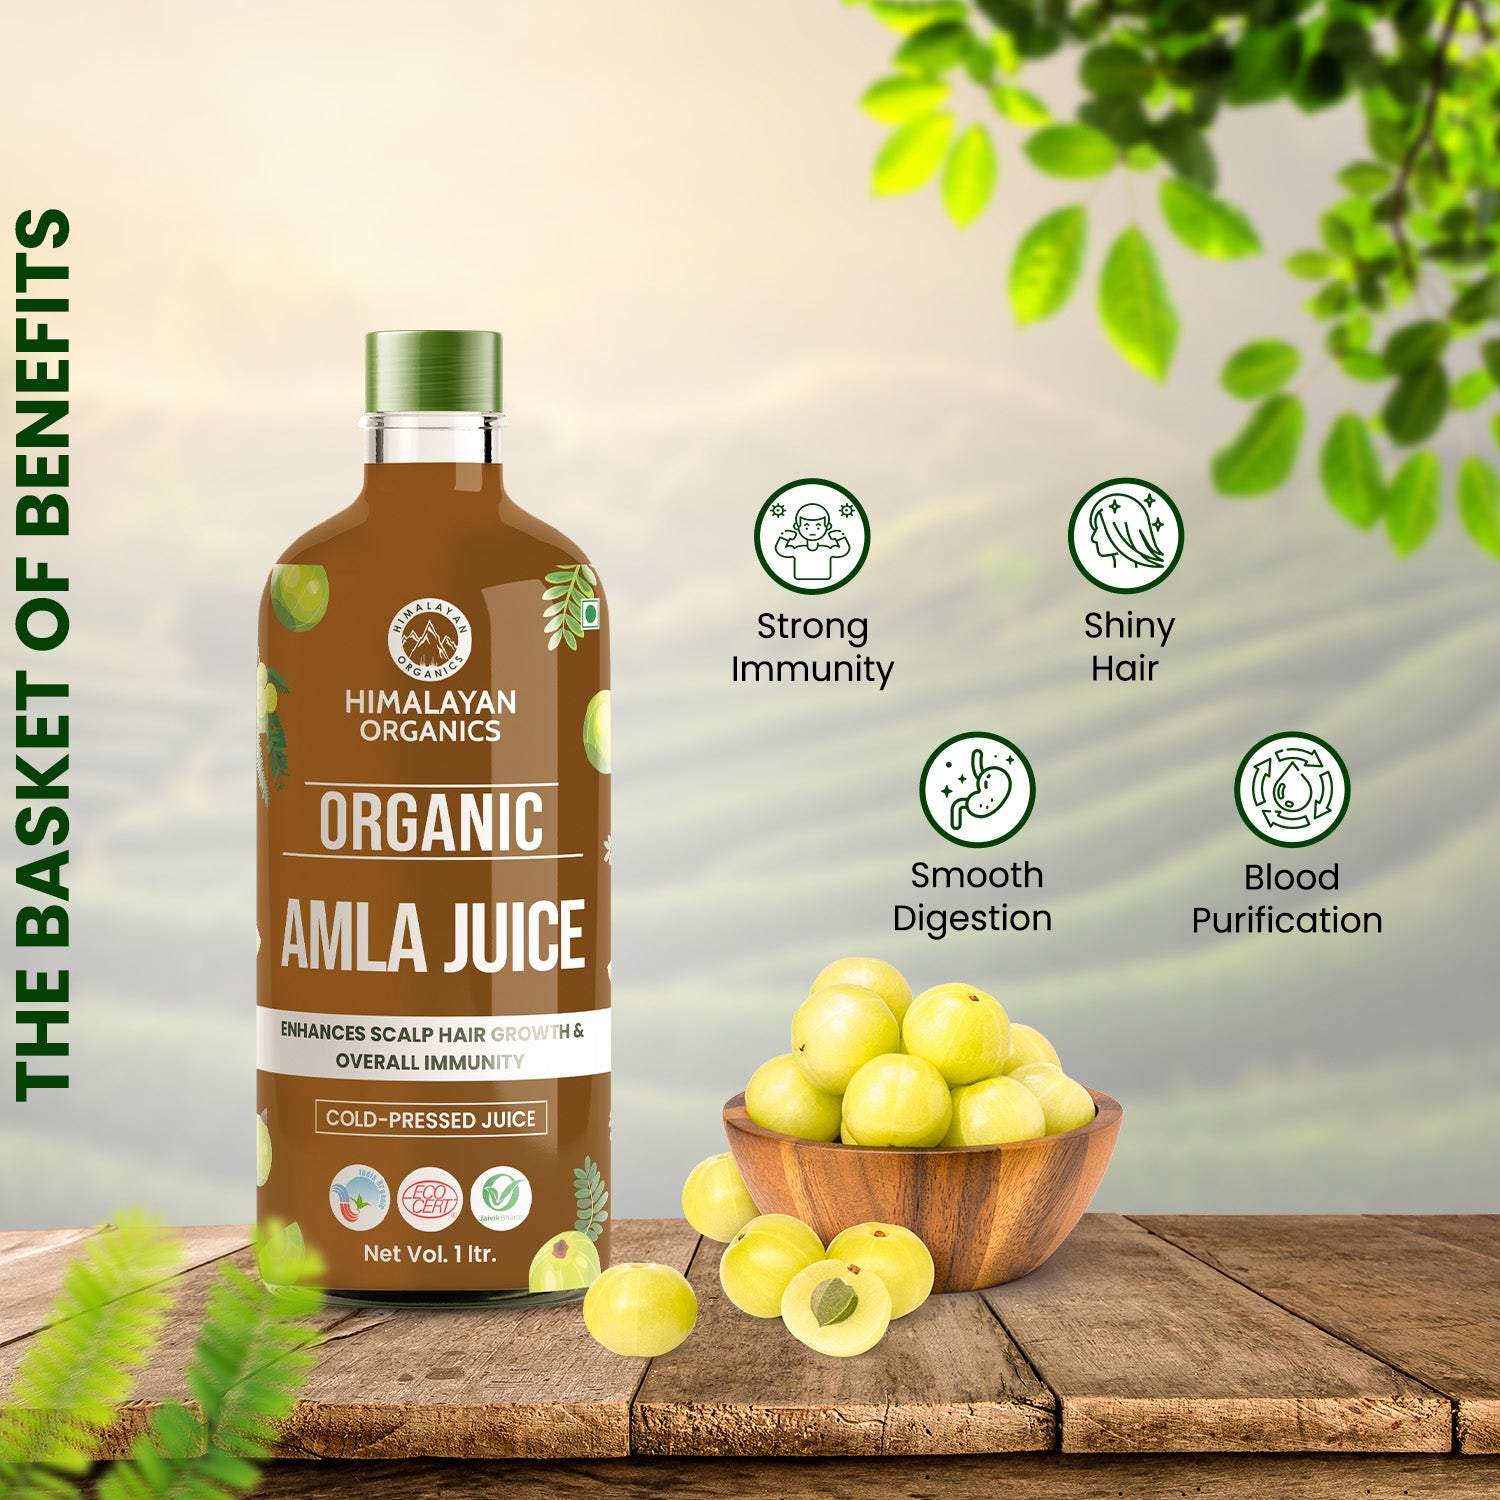 Top 9 Health Benefits Of Amla Indian Gooseberry Recipe For Amla Juice